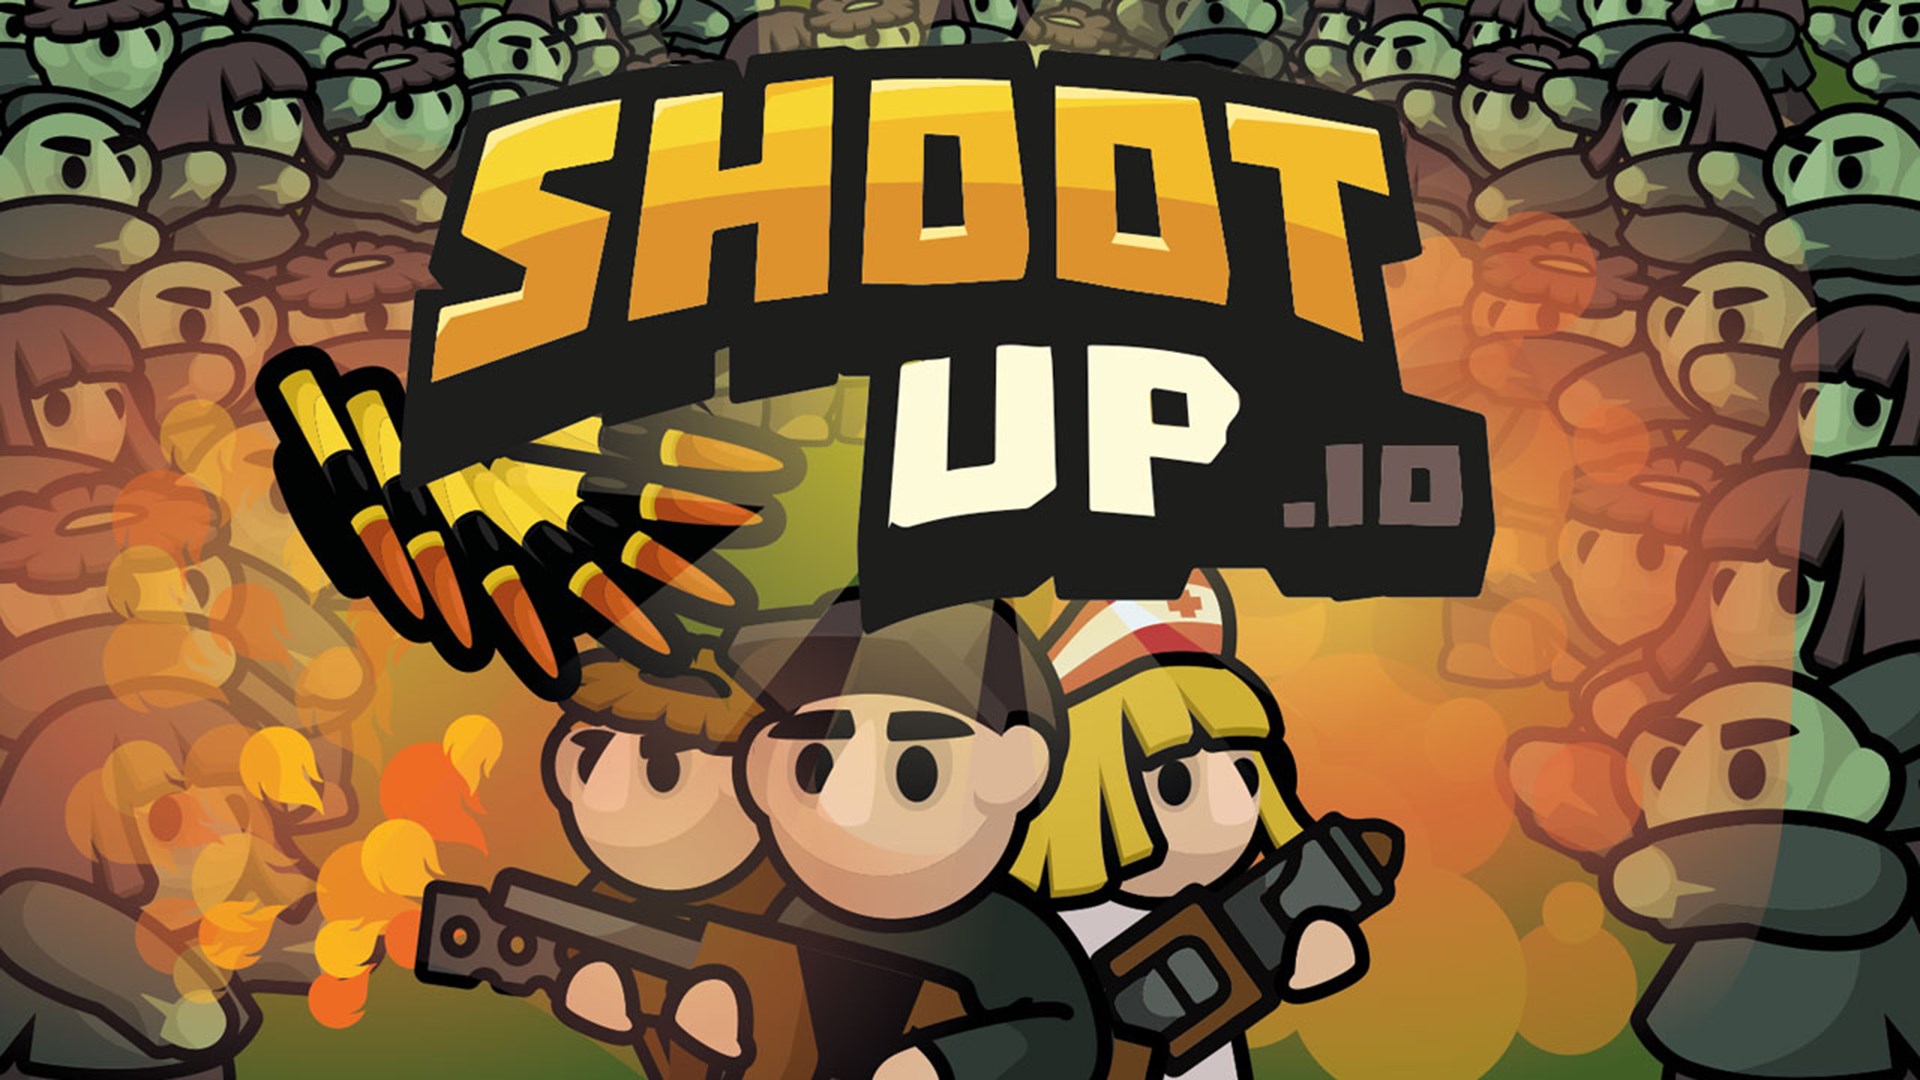 Get Shootup.io